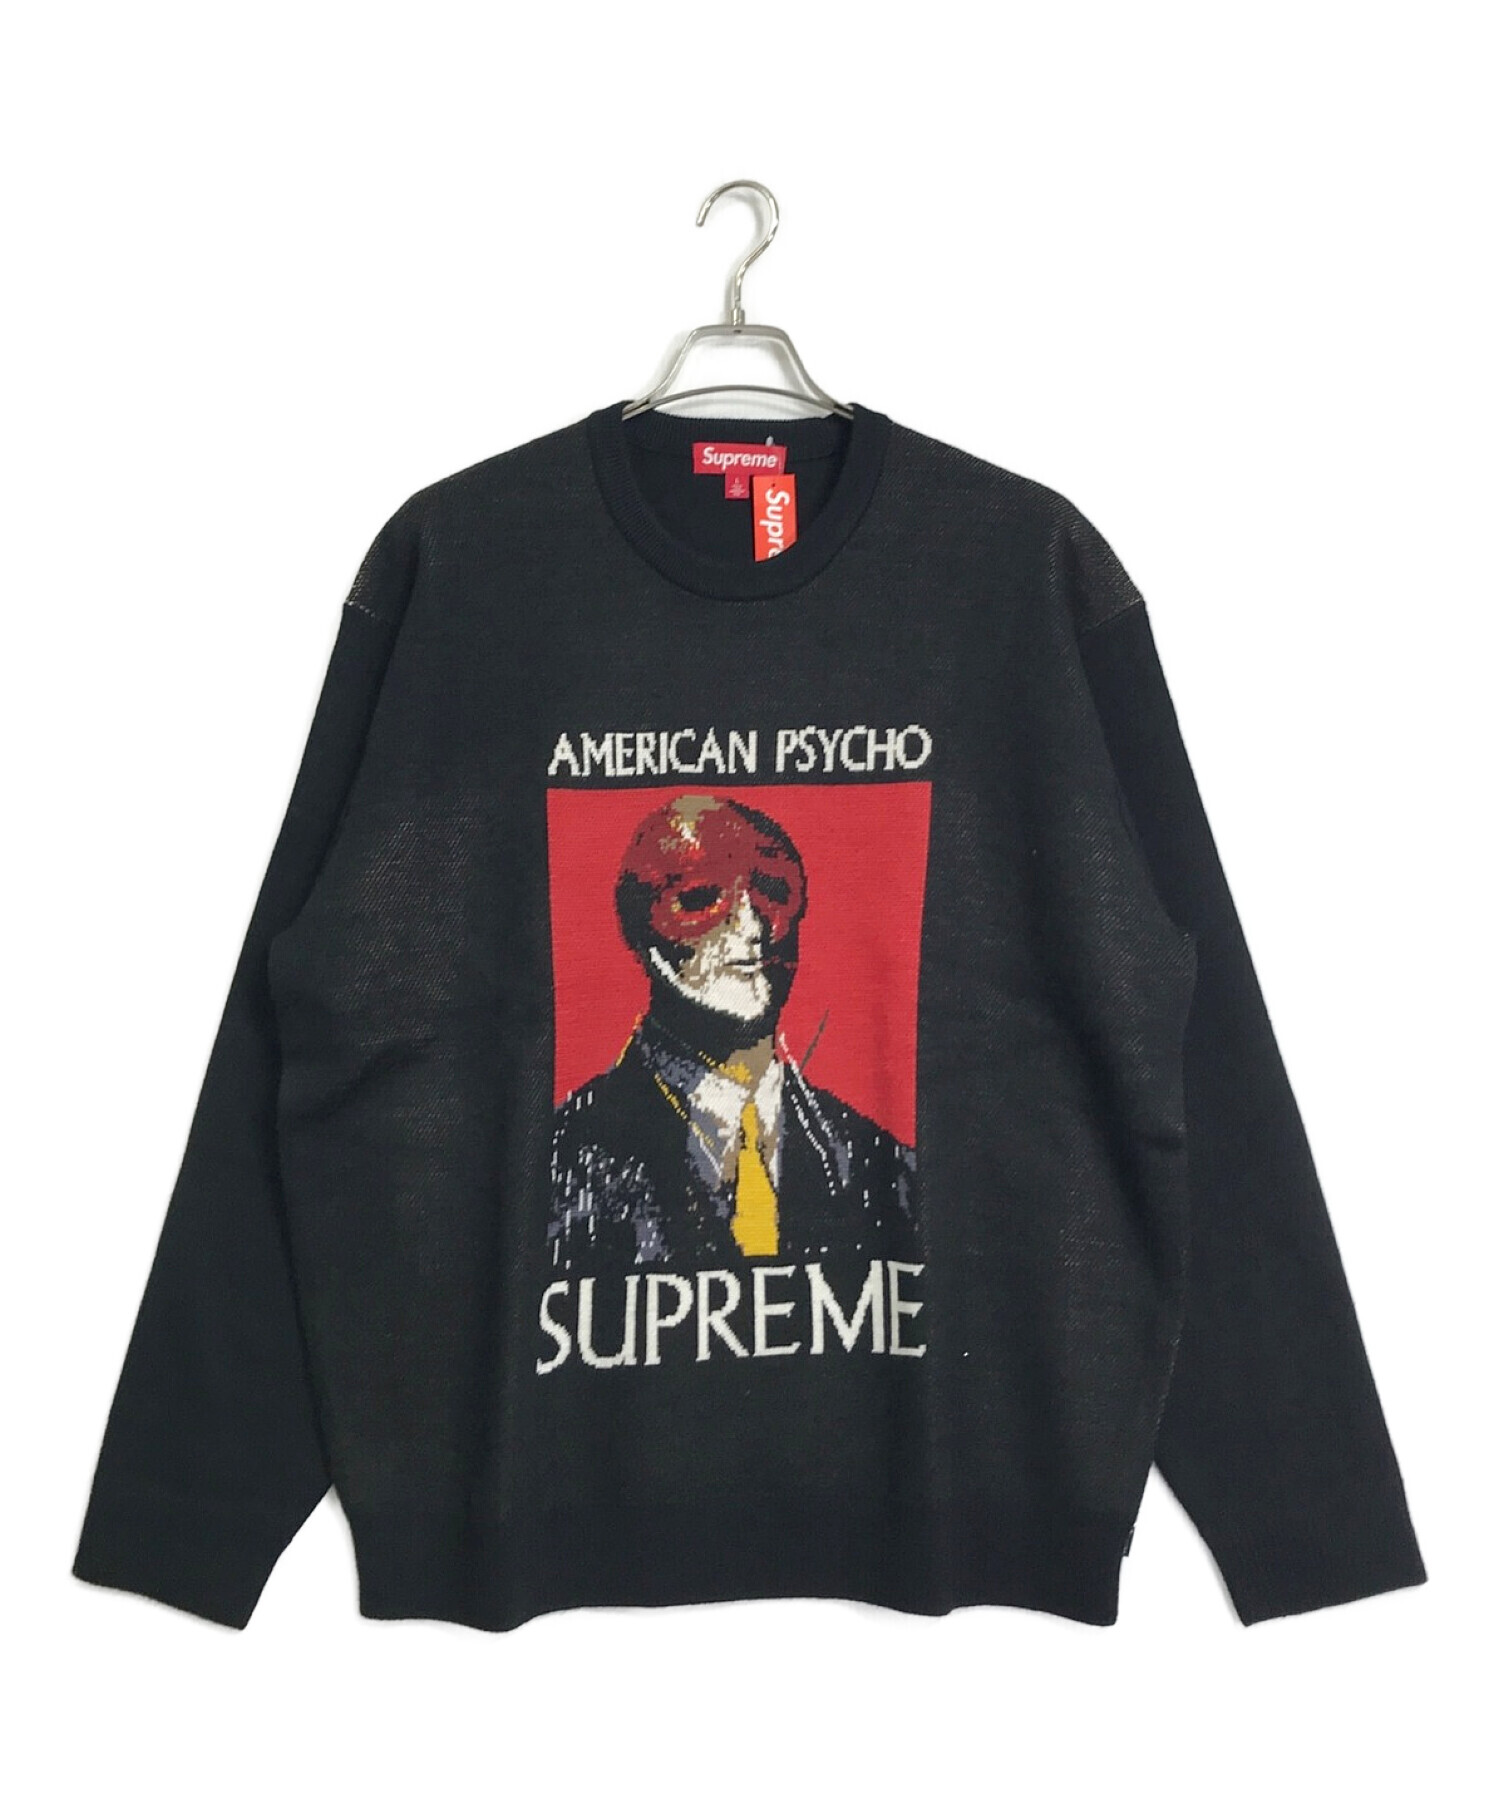 Supreme American psycho sweater L